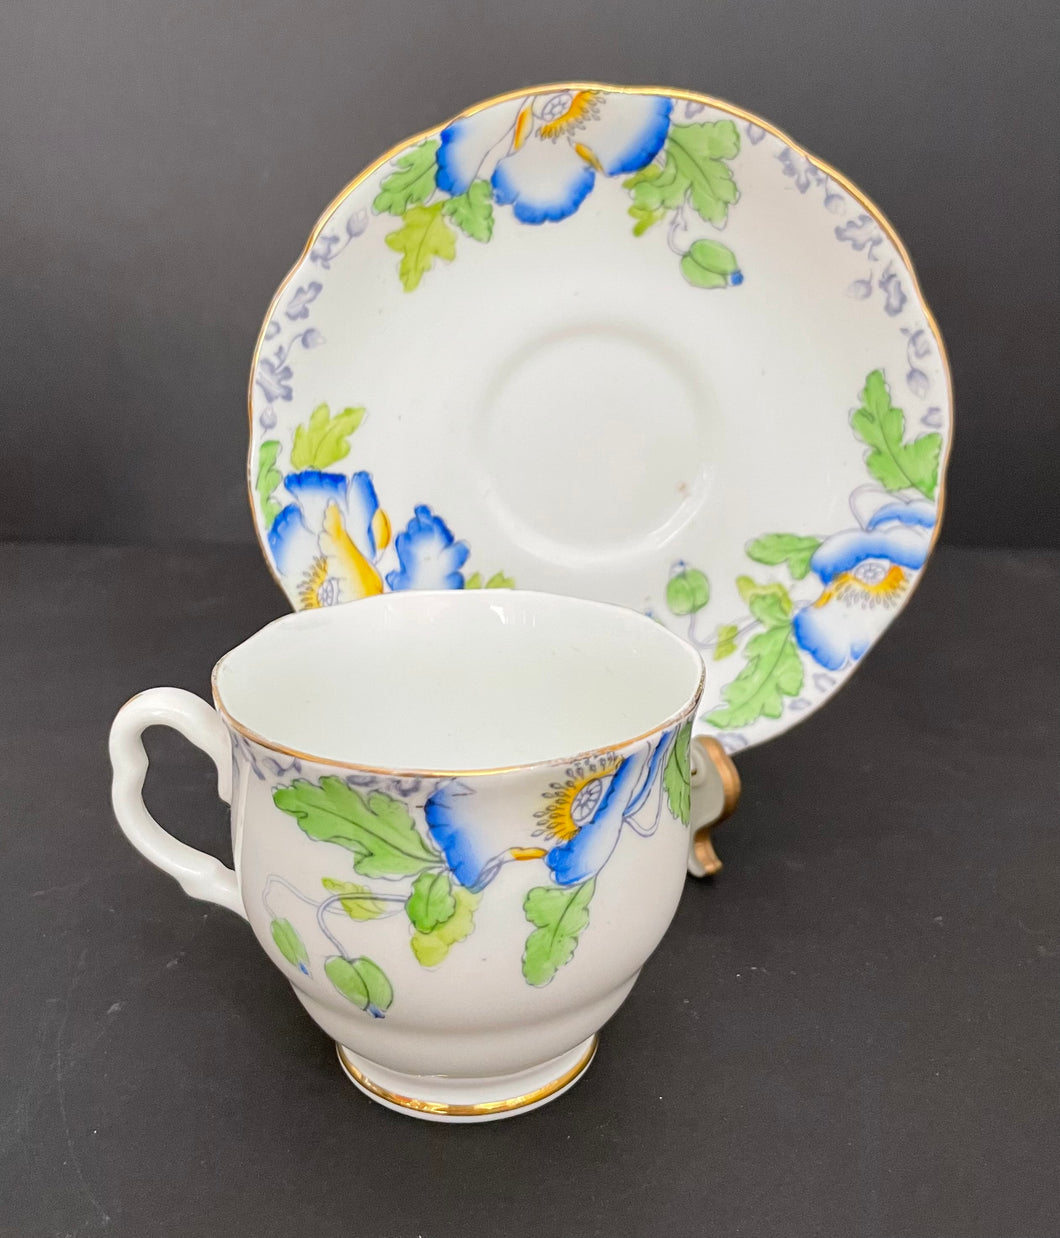 RARE Vintage Royal Albert Bone China Poppyland Porcelain Teacup & Saucer